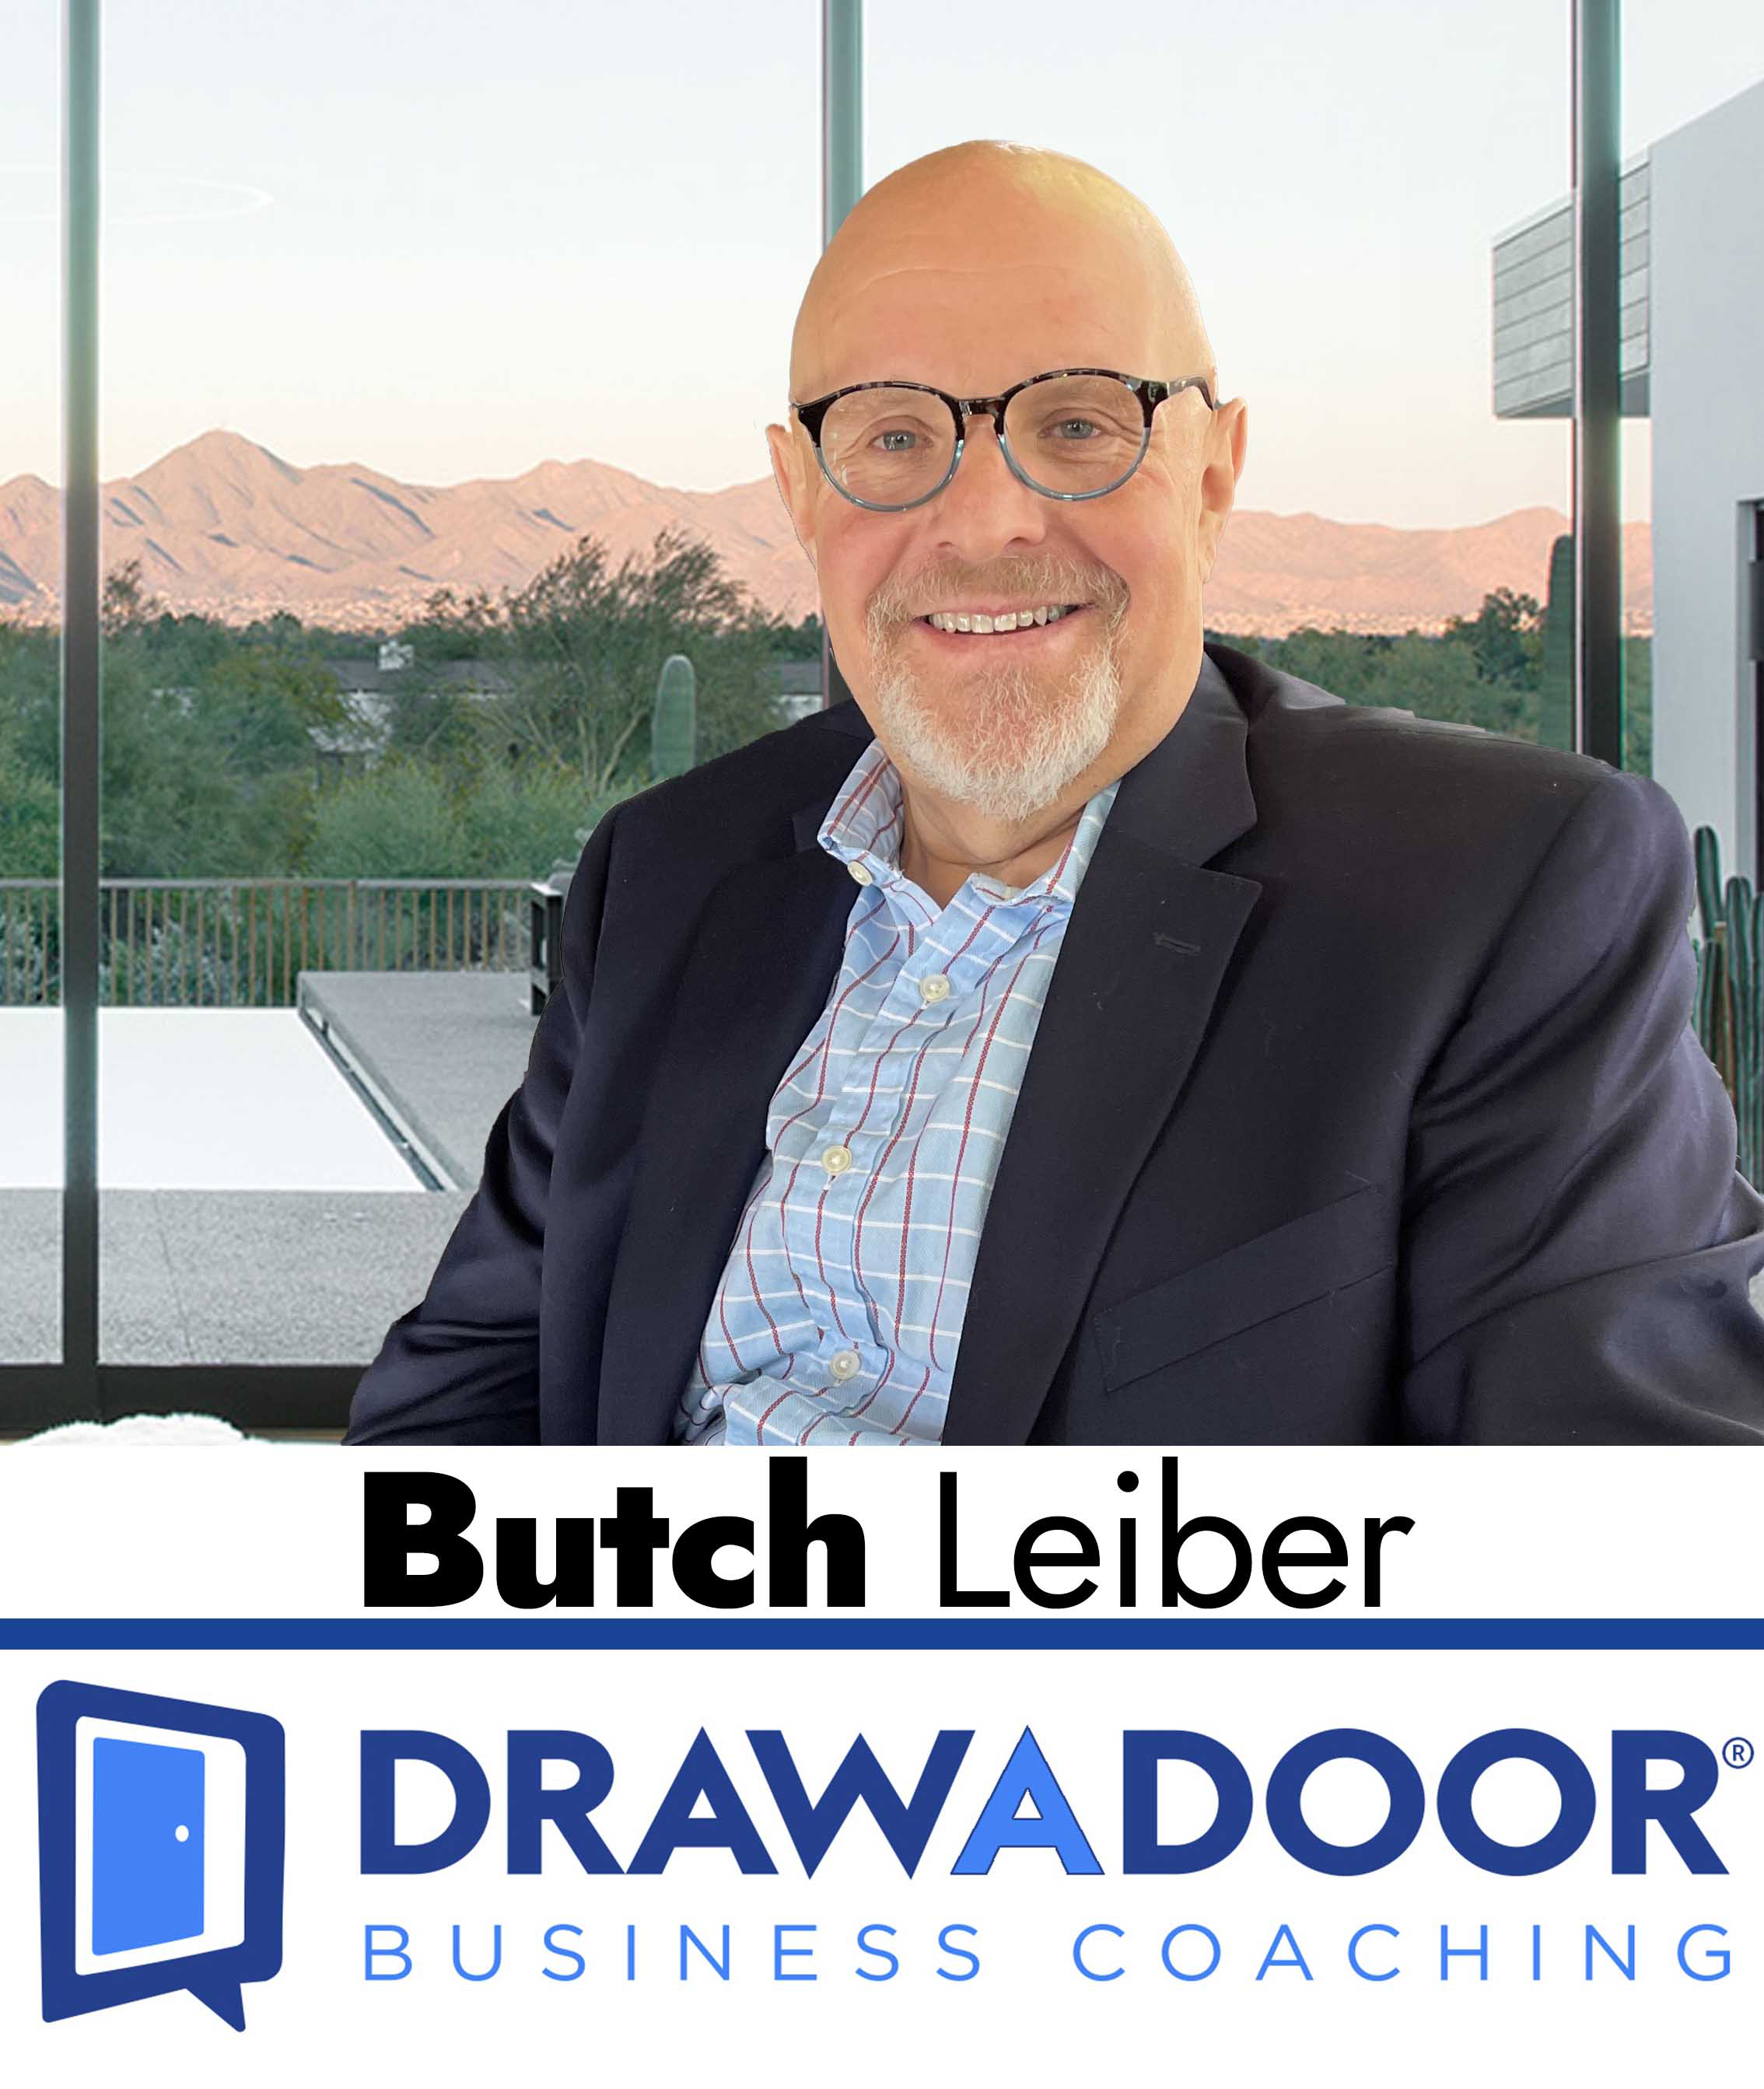 Butch Leiber